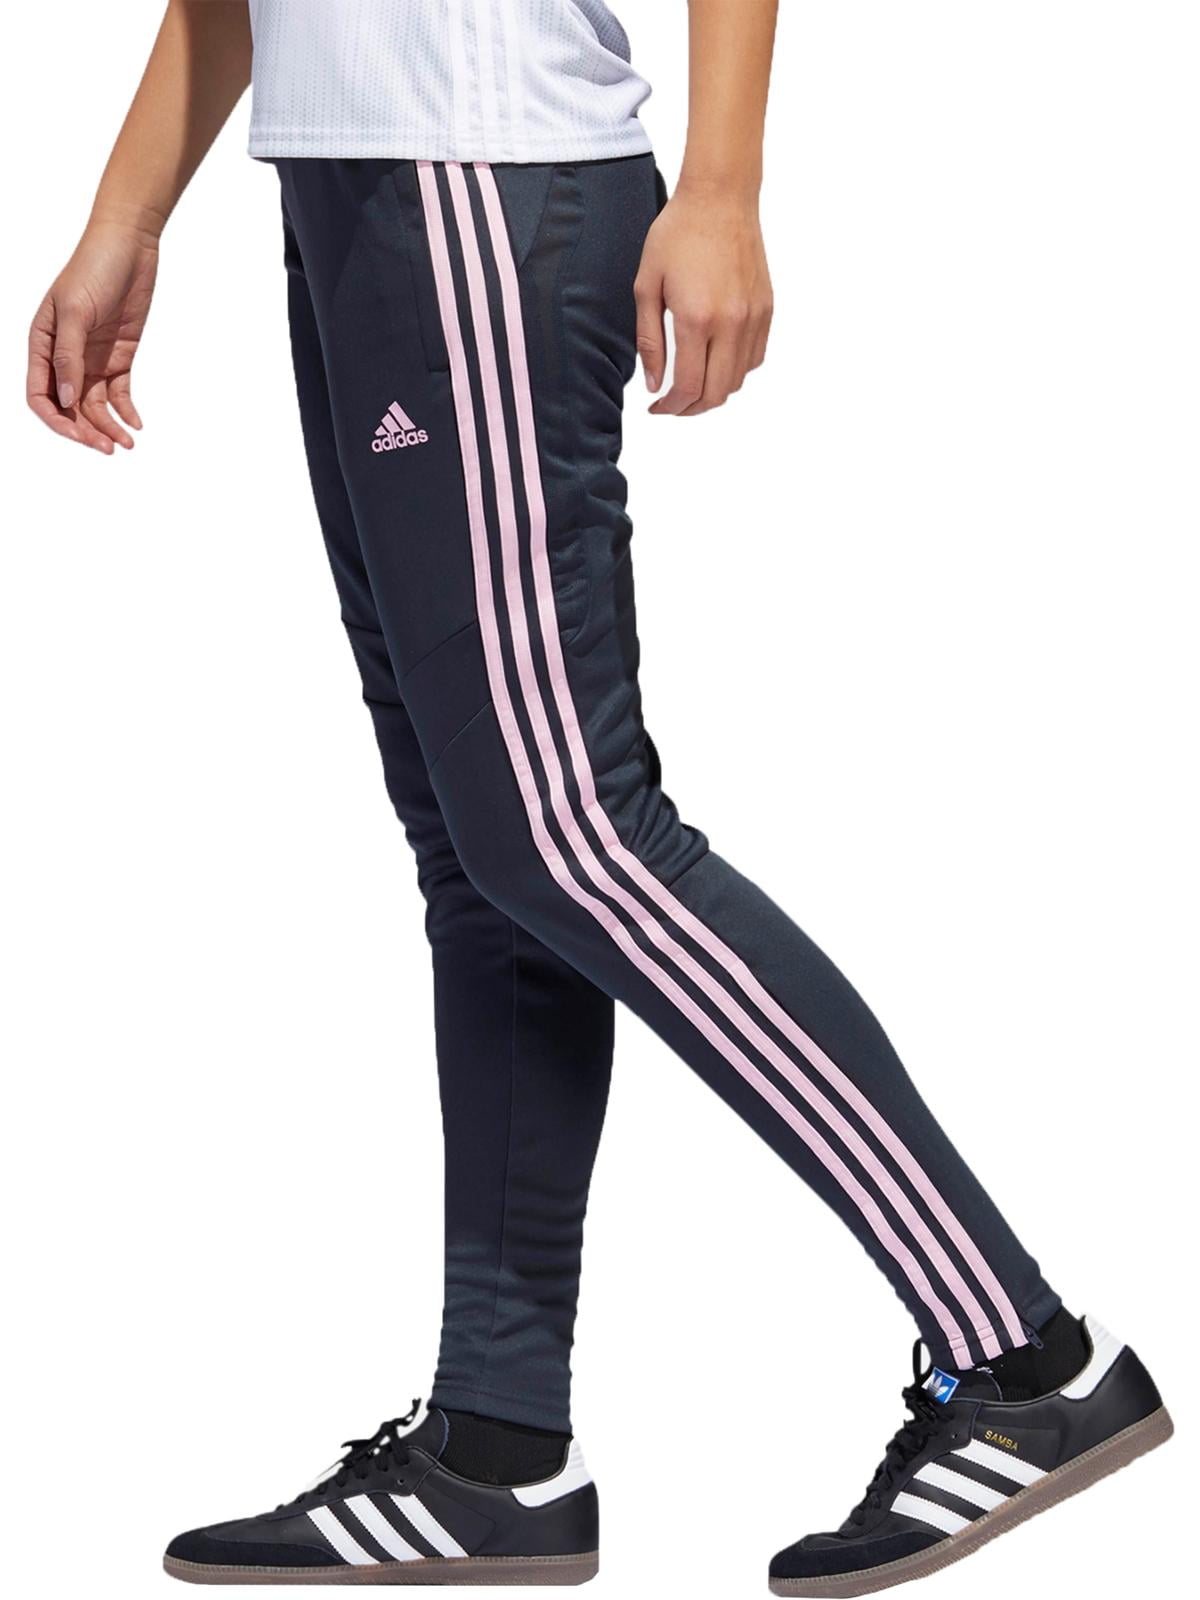 Adidas Tiro 19 3/4 Pants Youth Climacool Adidas Soccer Pants Kids NEW | eBay